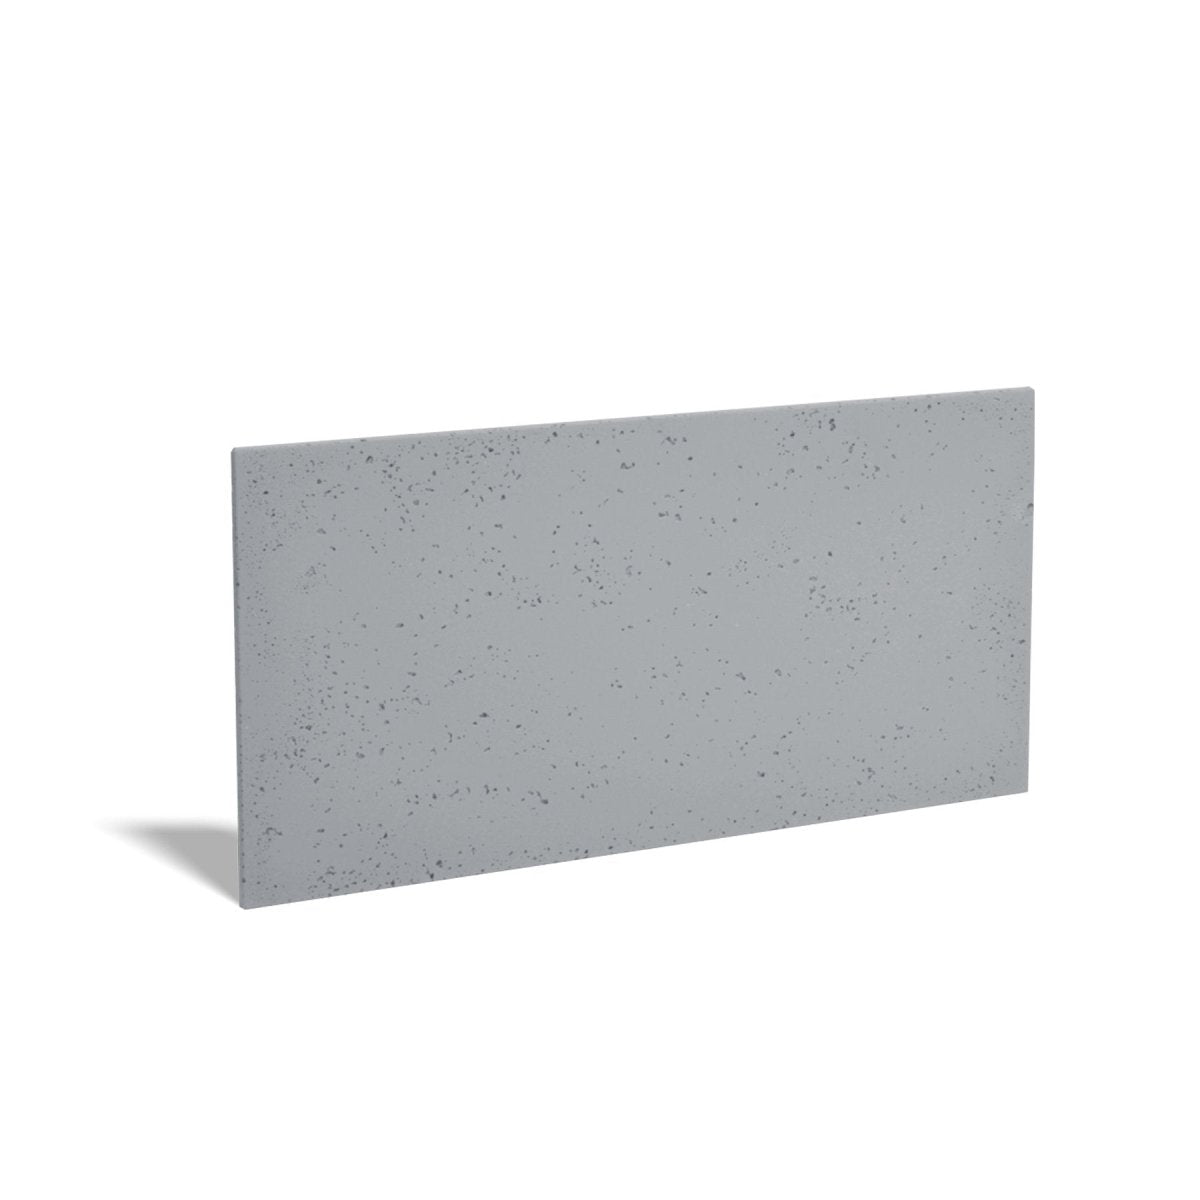 Concrete Wall Panel EXTERIOR - 60 x 60 cm - DecorMania.eu